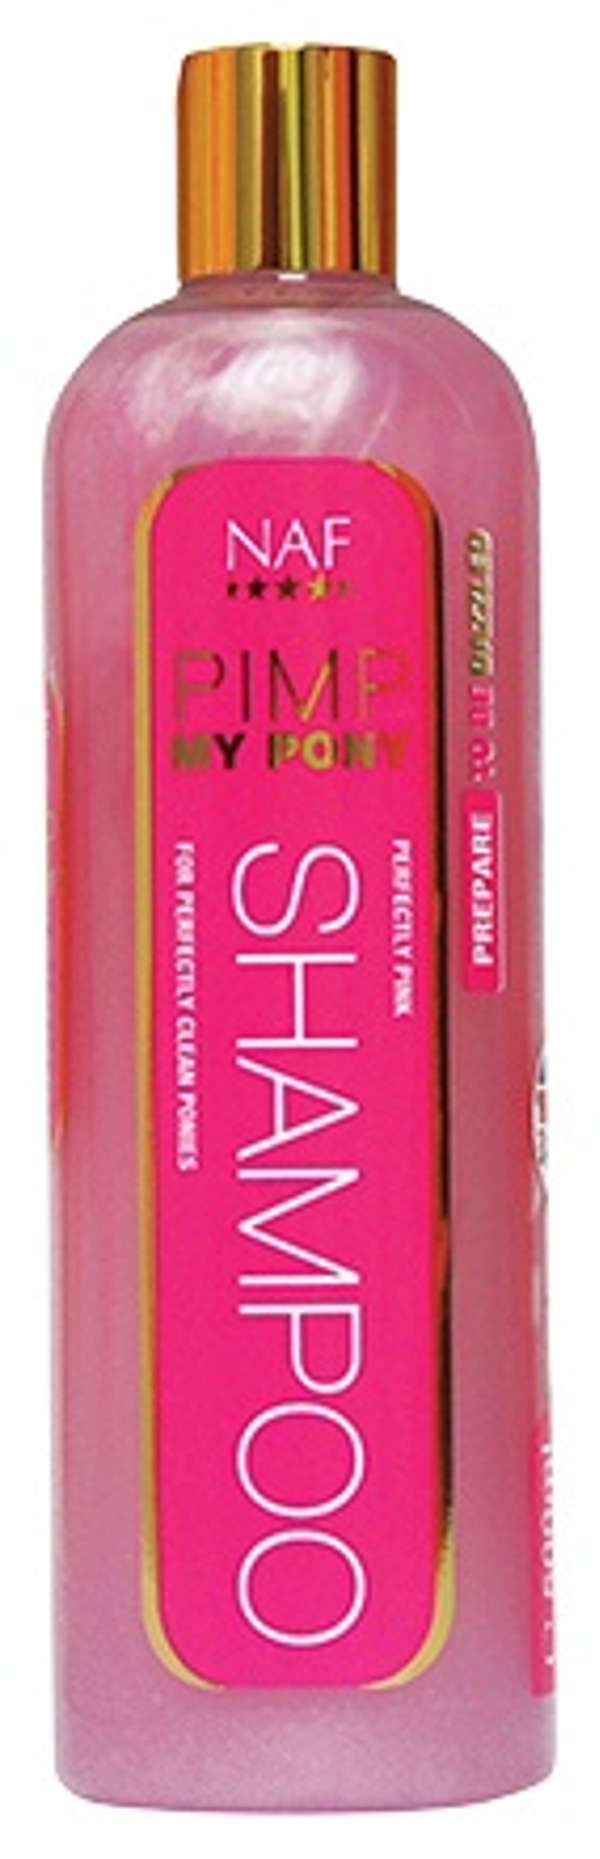 Naf Pimp My Pony Pink Shampoo